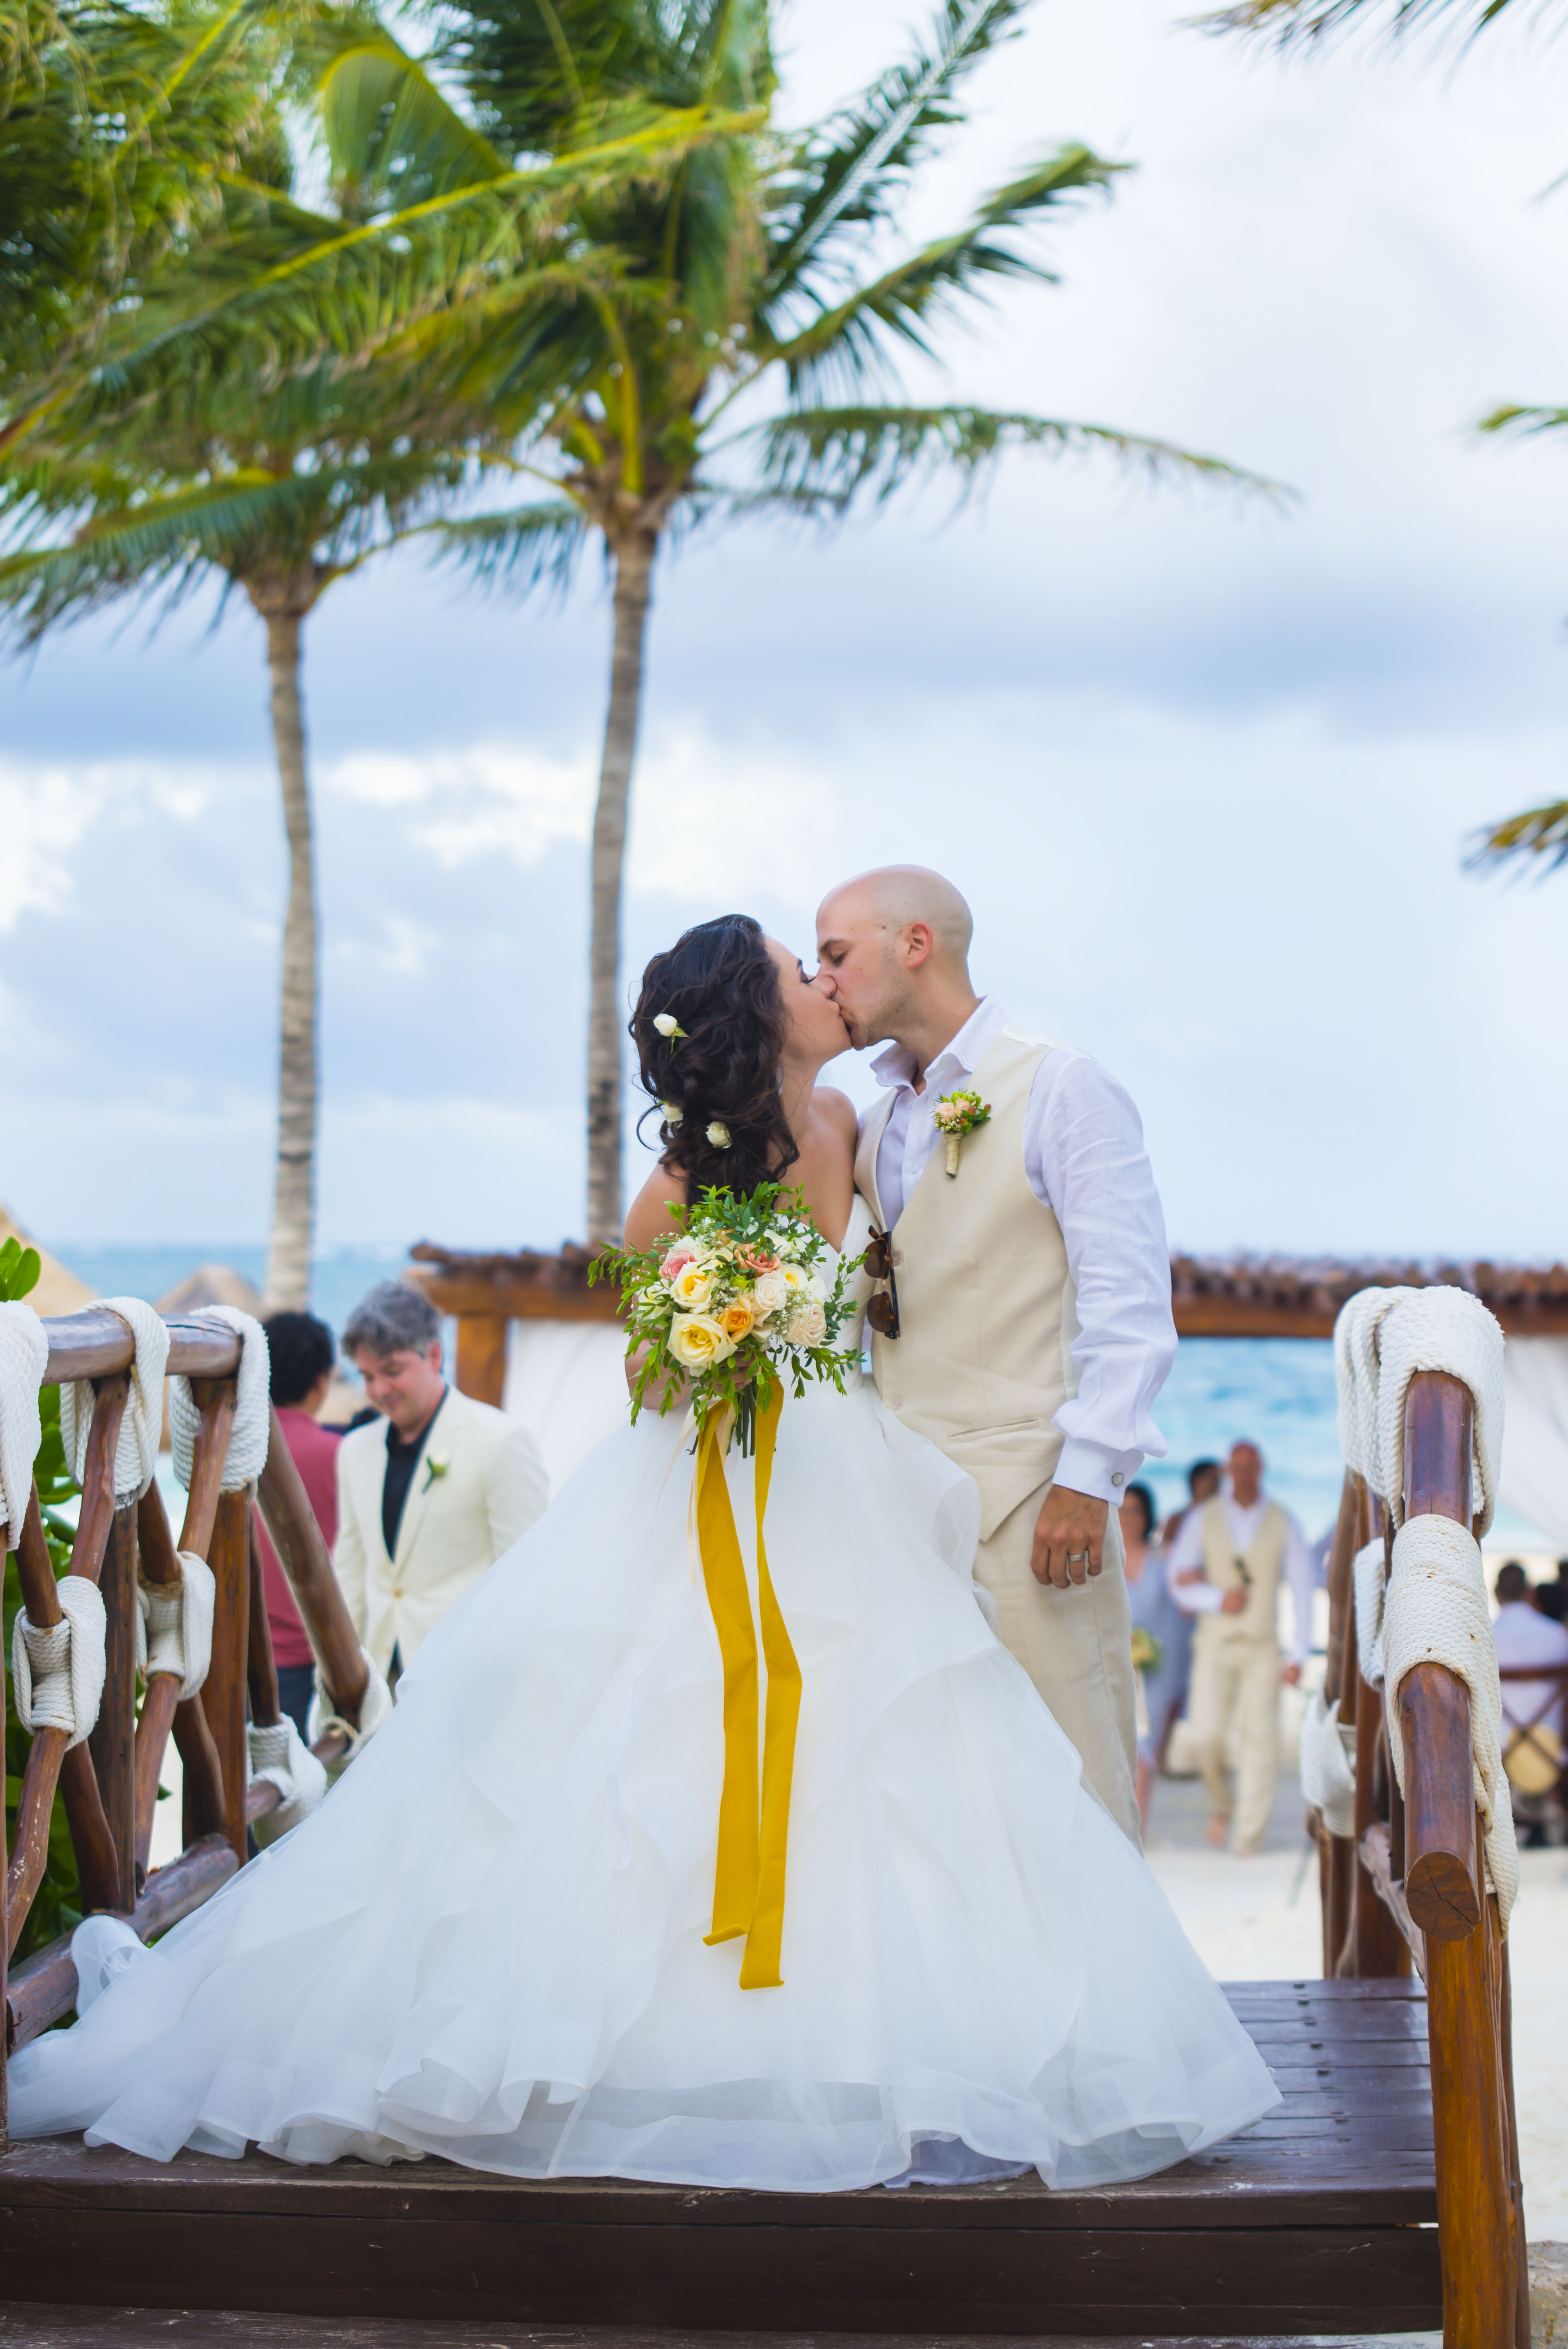 Miragliotta Beach Wedding Kiss